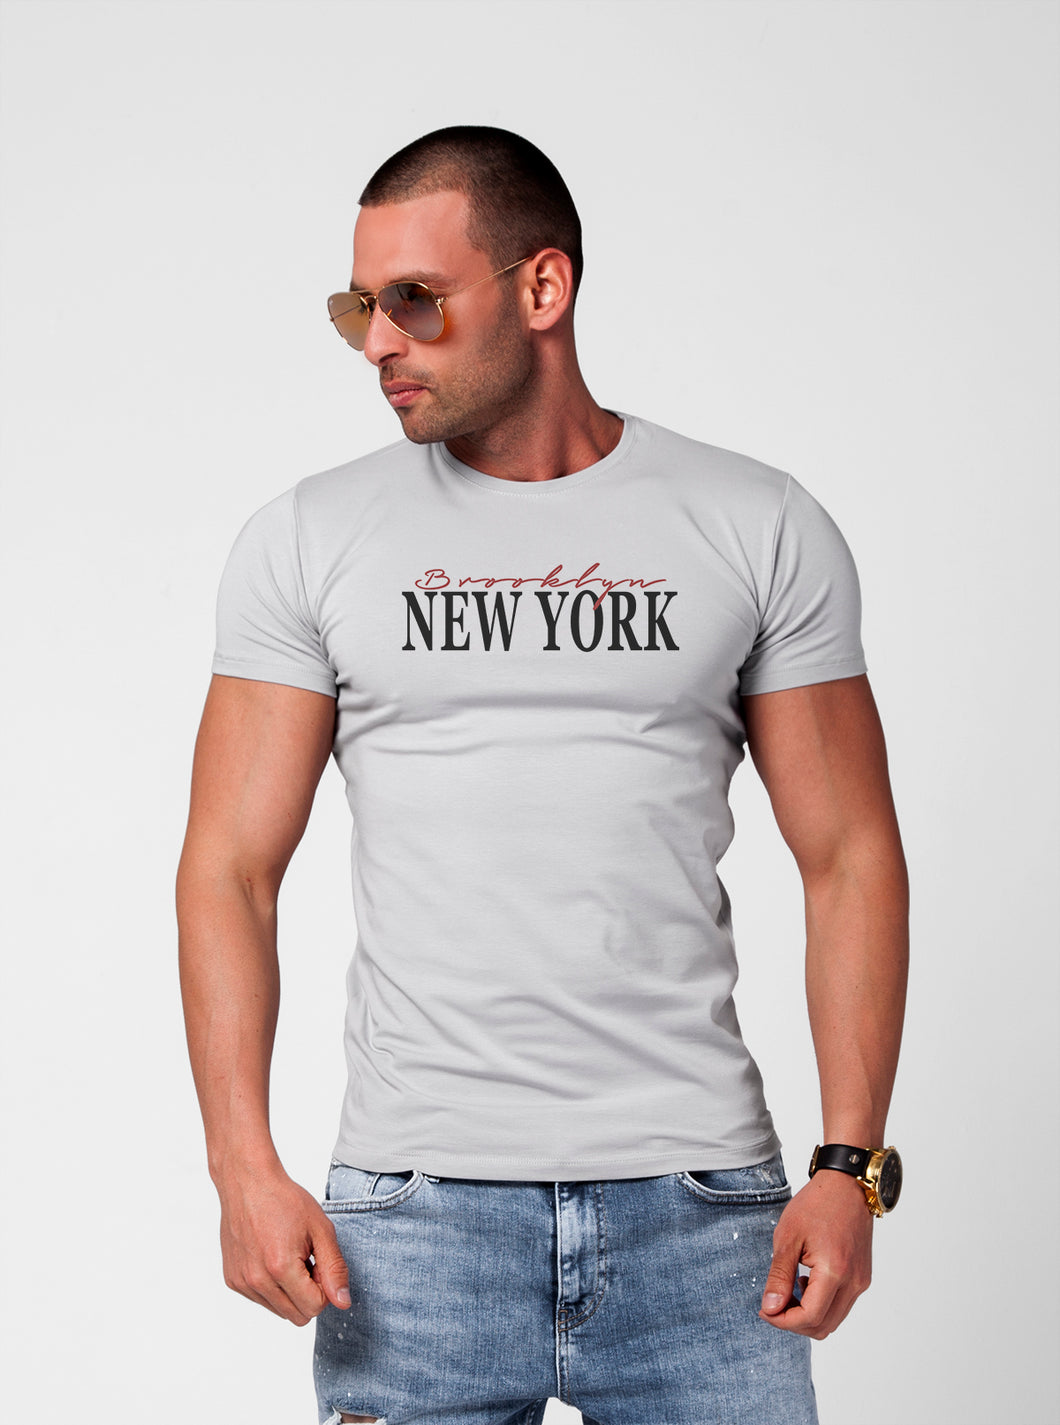 1) Men's T-shirt "New York Brooklyn" / Casual Tee Shirts Online – RB Store